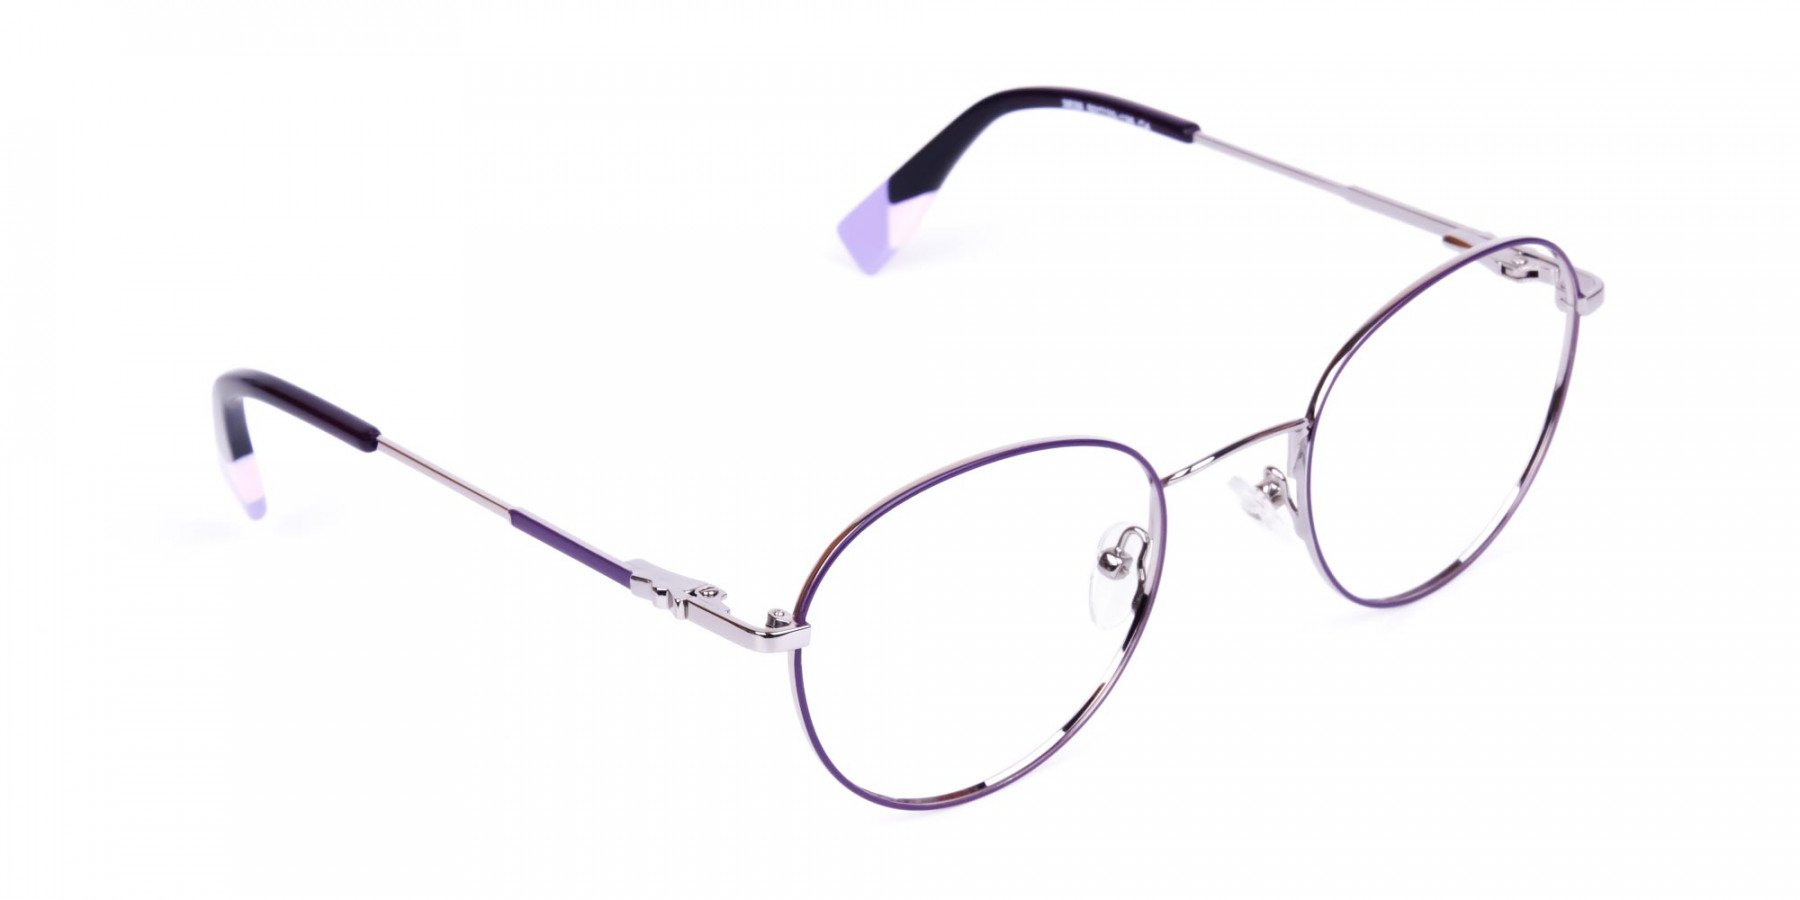 Stylish-Dark-Purple-and-Silver-Round-Glasses-1